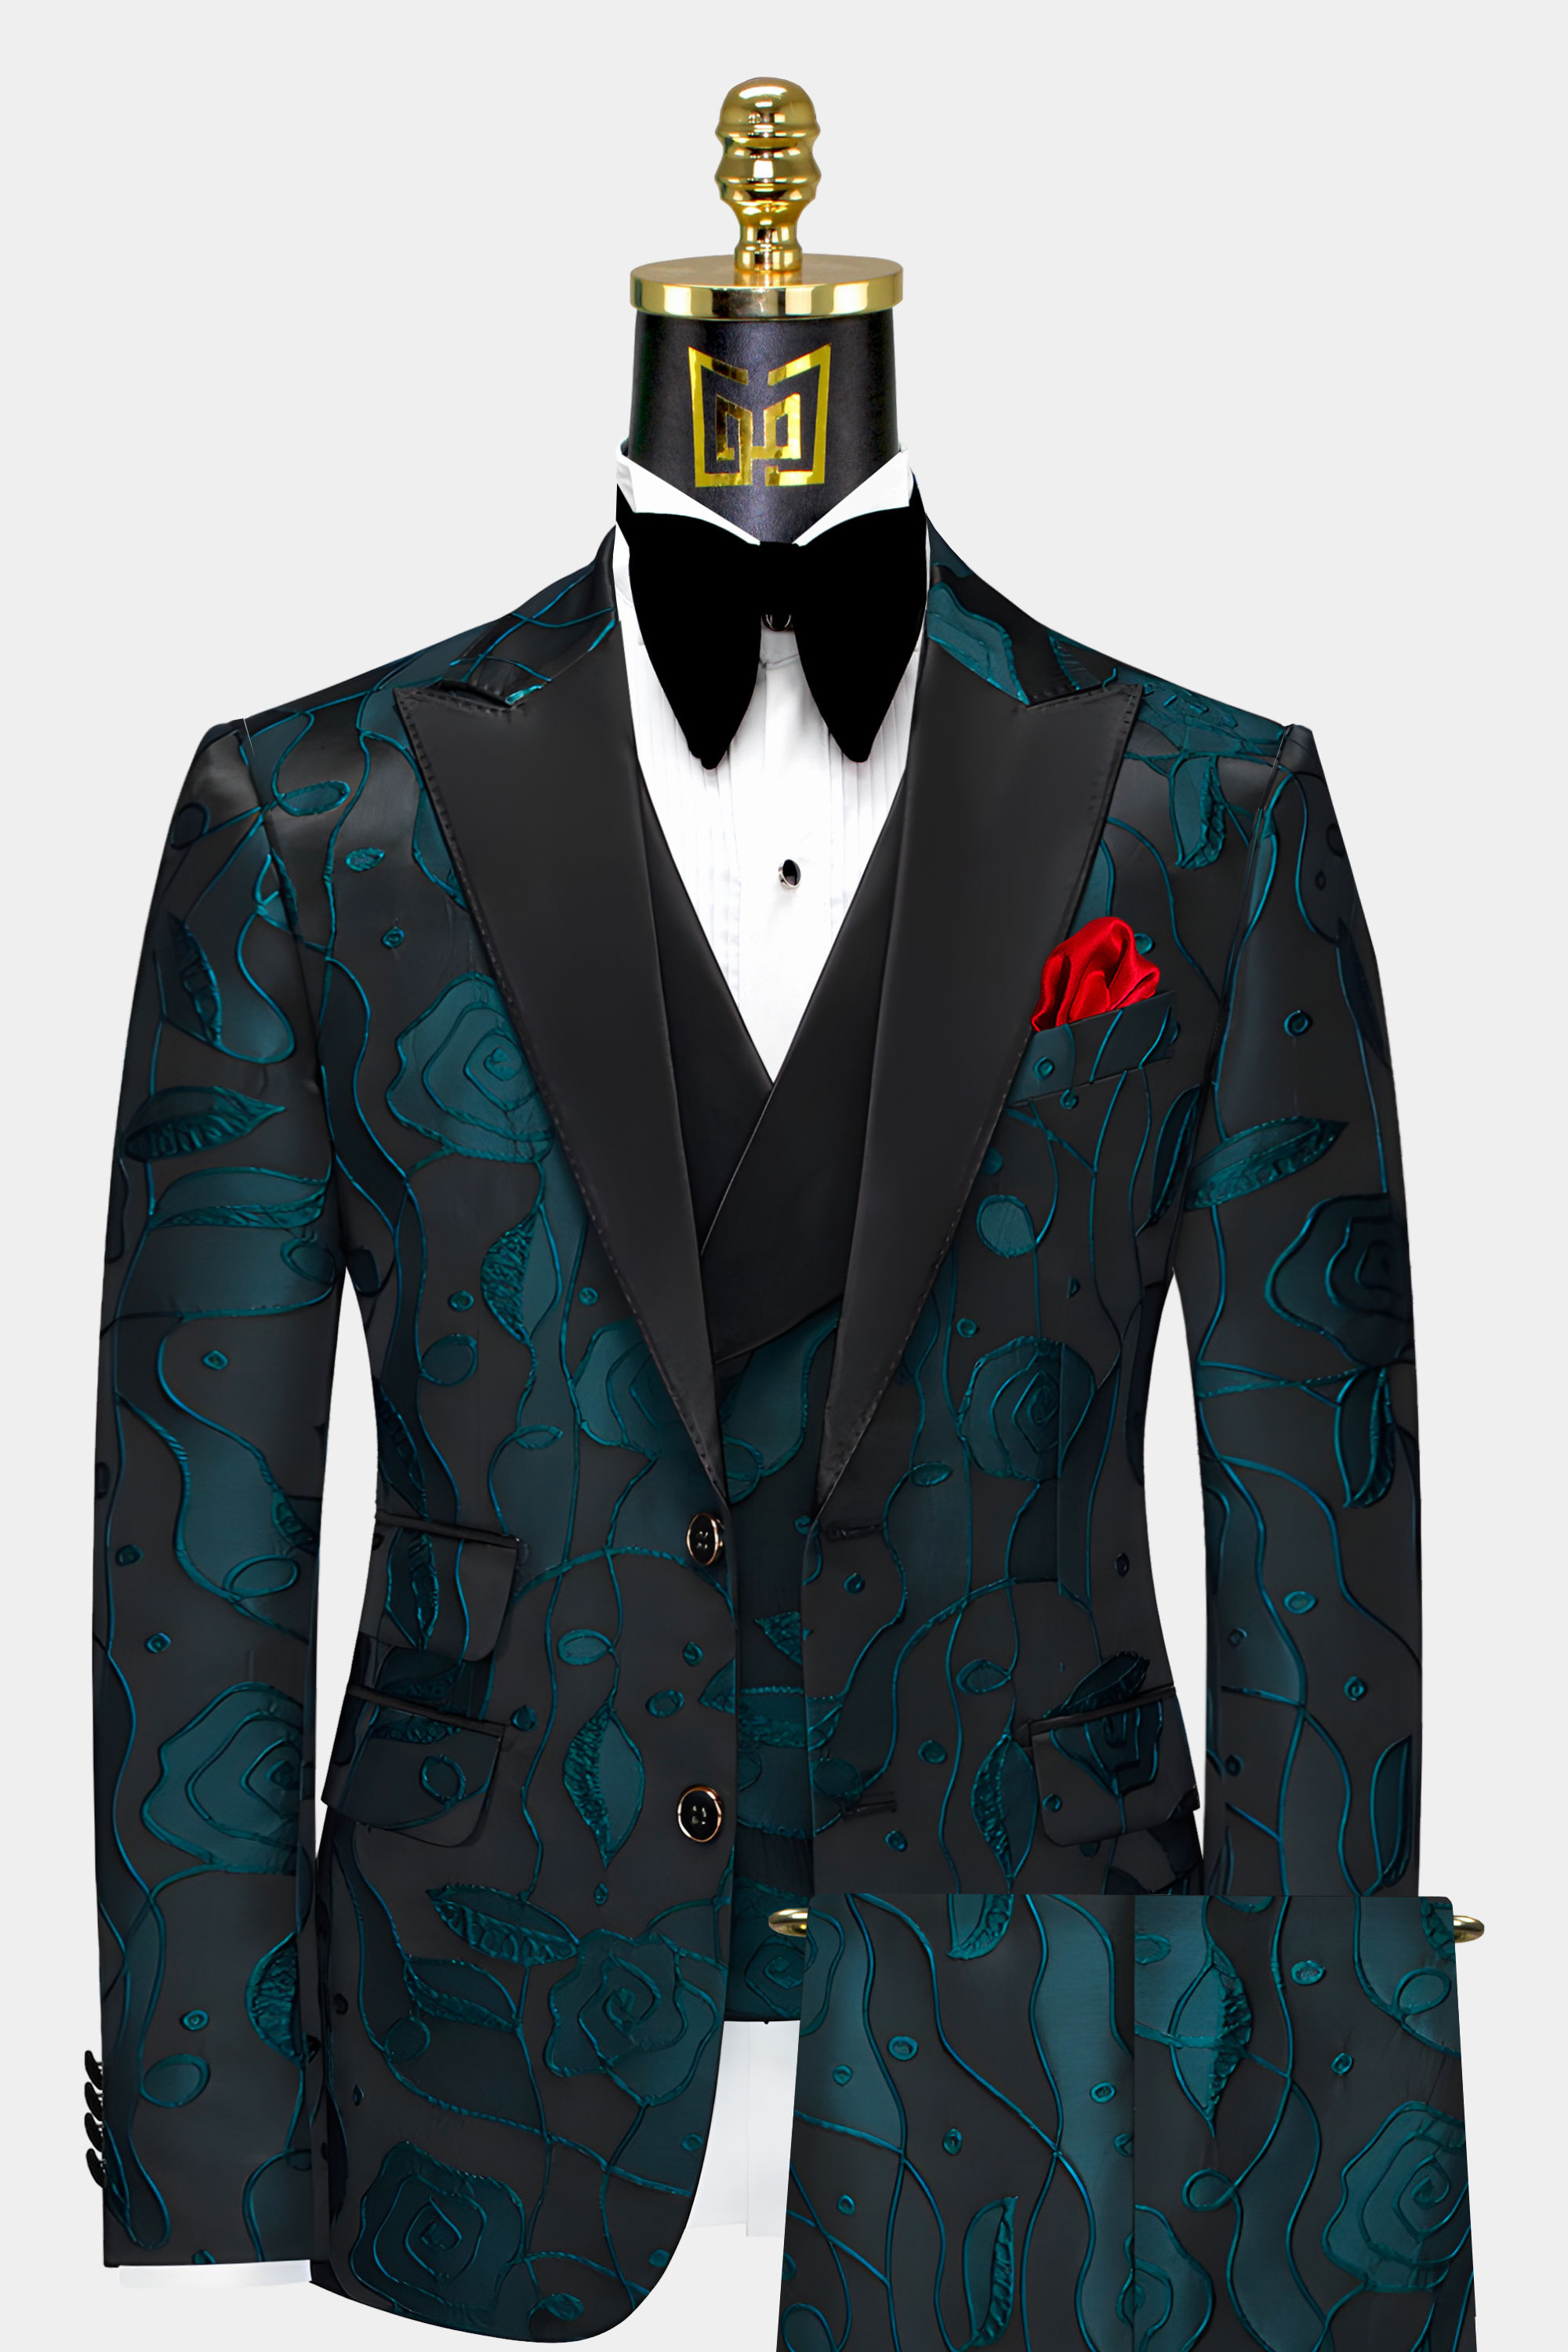 Mens-Teal-and-Black-Tuxedo-Groom-Wedding-Prom-Suit-from-Gentlemansguru.com